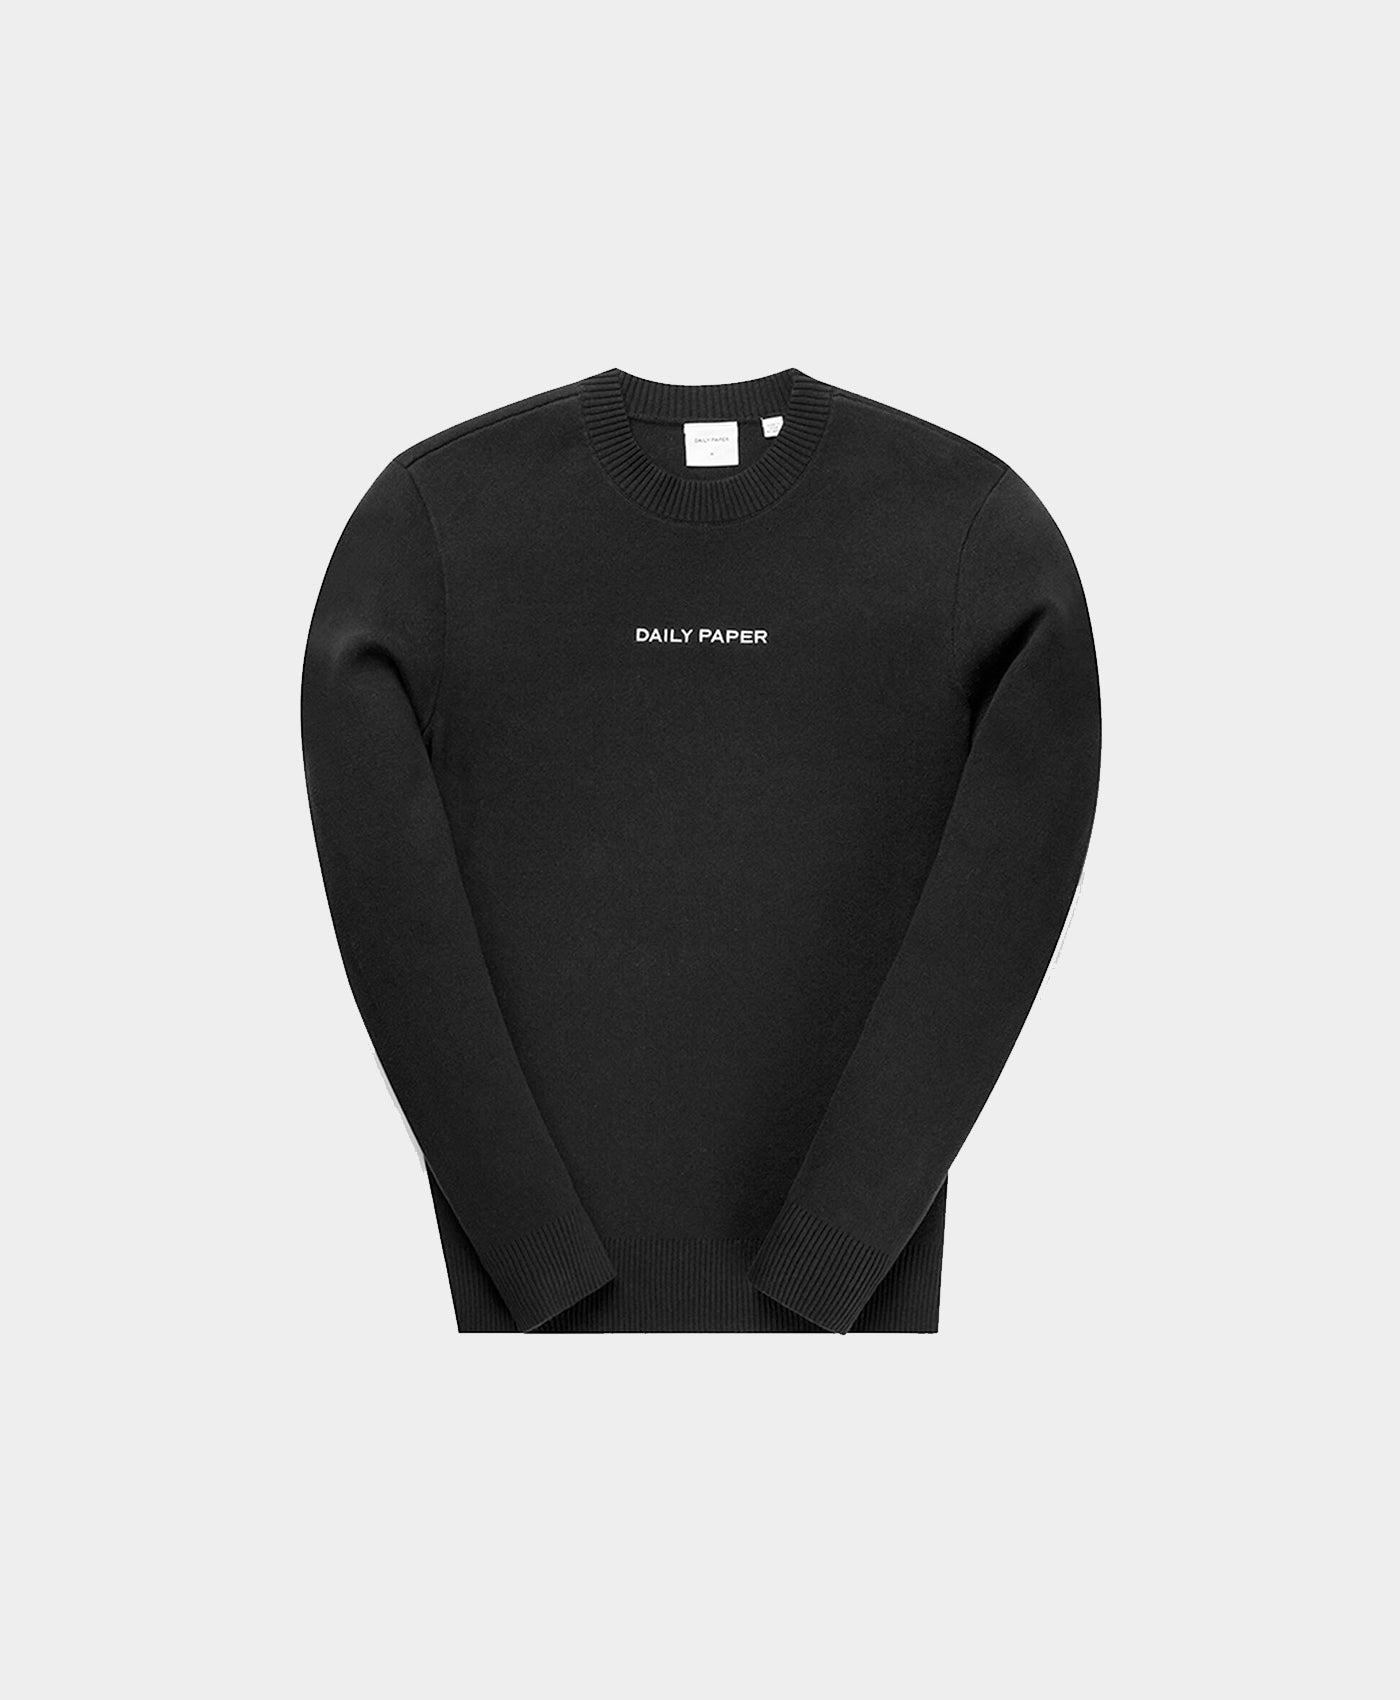 DP - Black Etype Knit Sweater - Packshot - Front